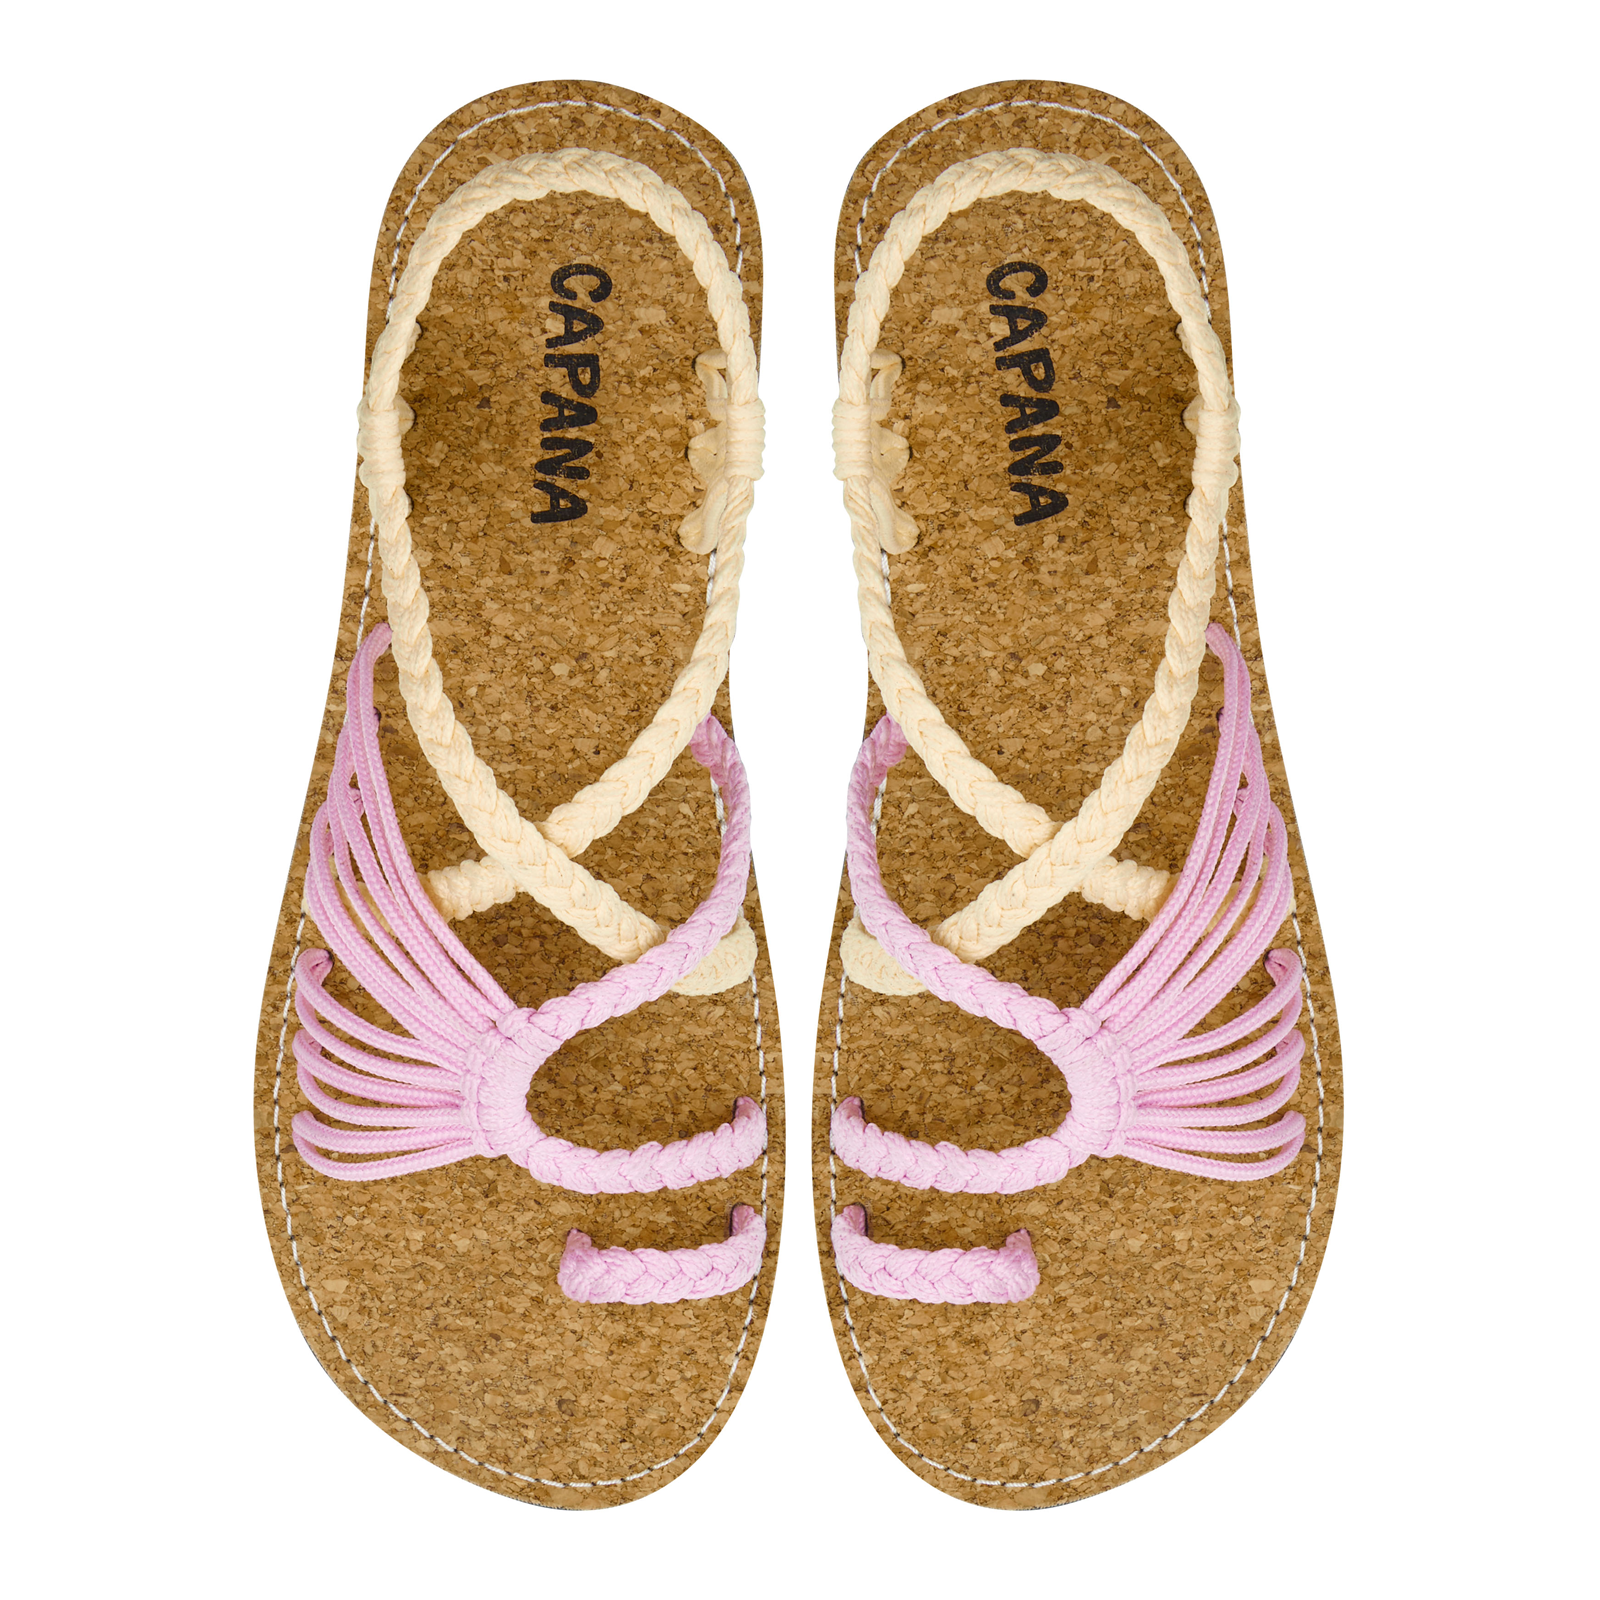 Commune Candy Cream Rope Sandals Pink Cream loop design Flat sandals for women